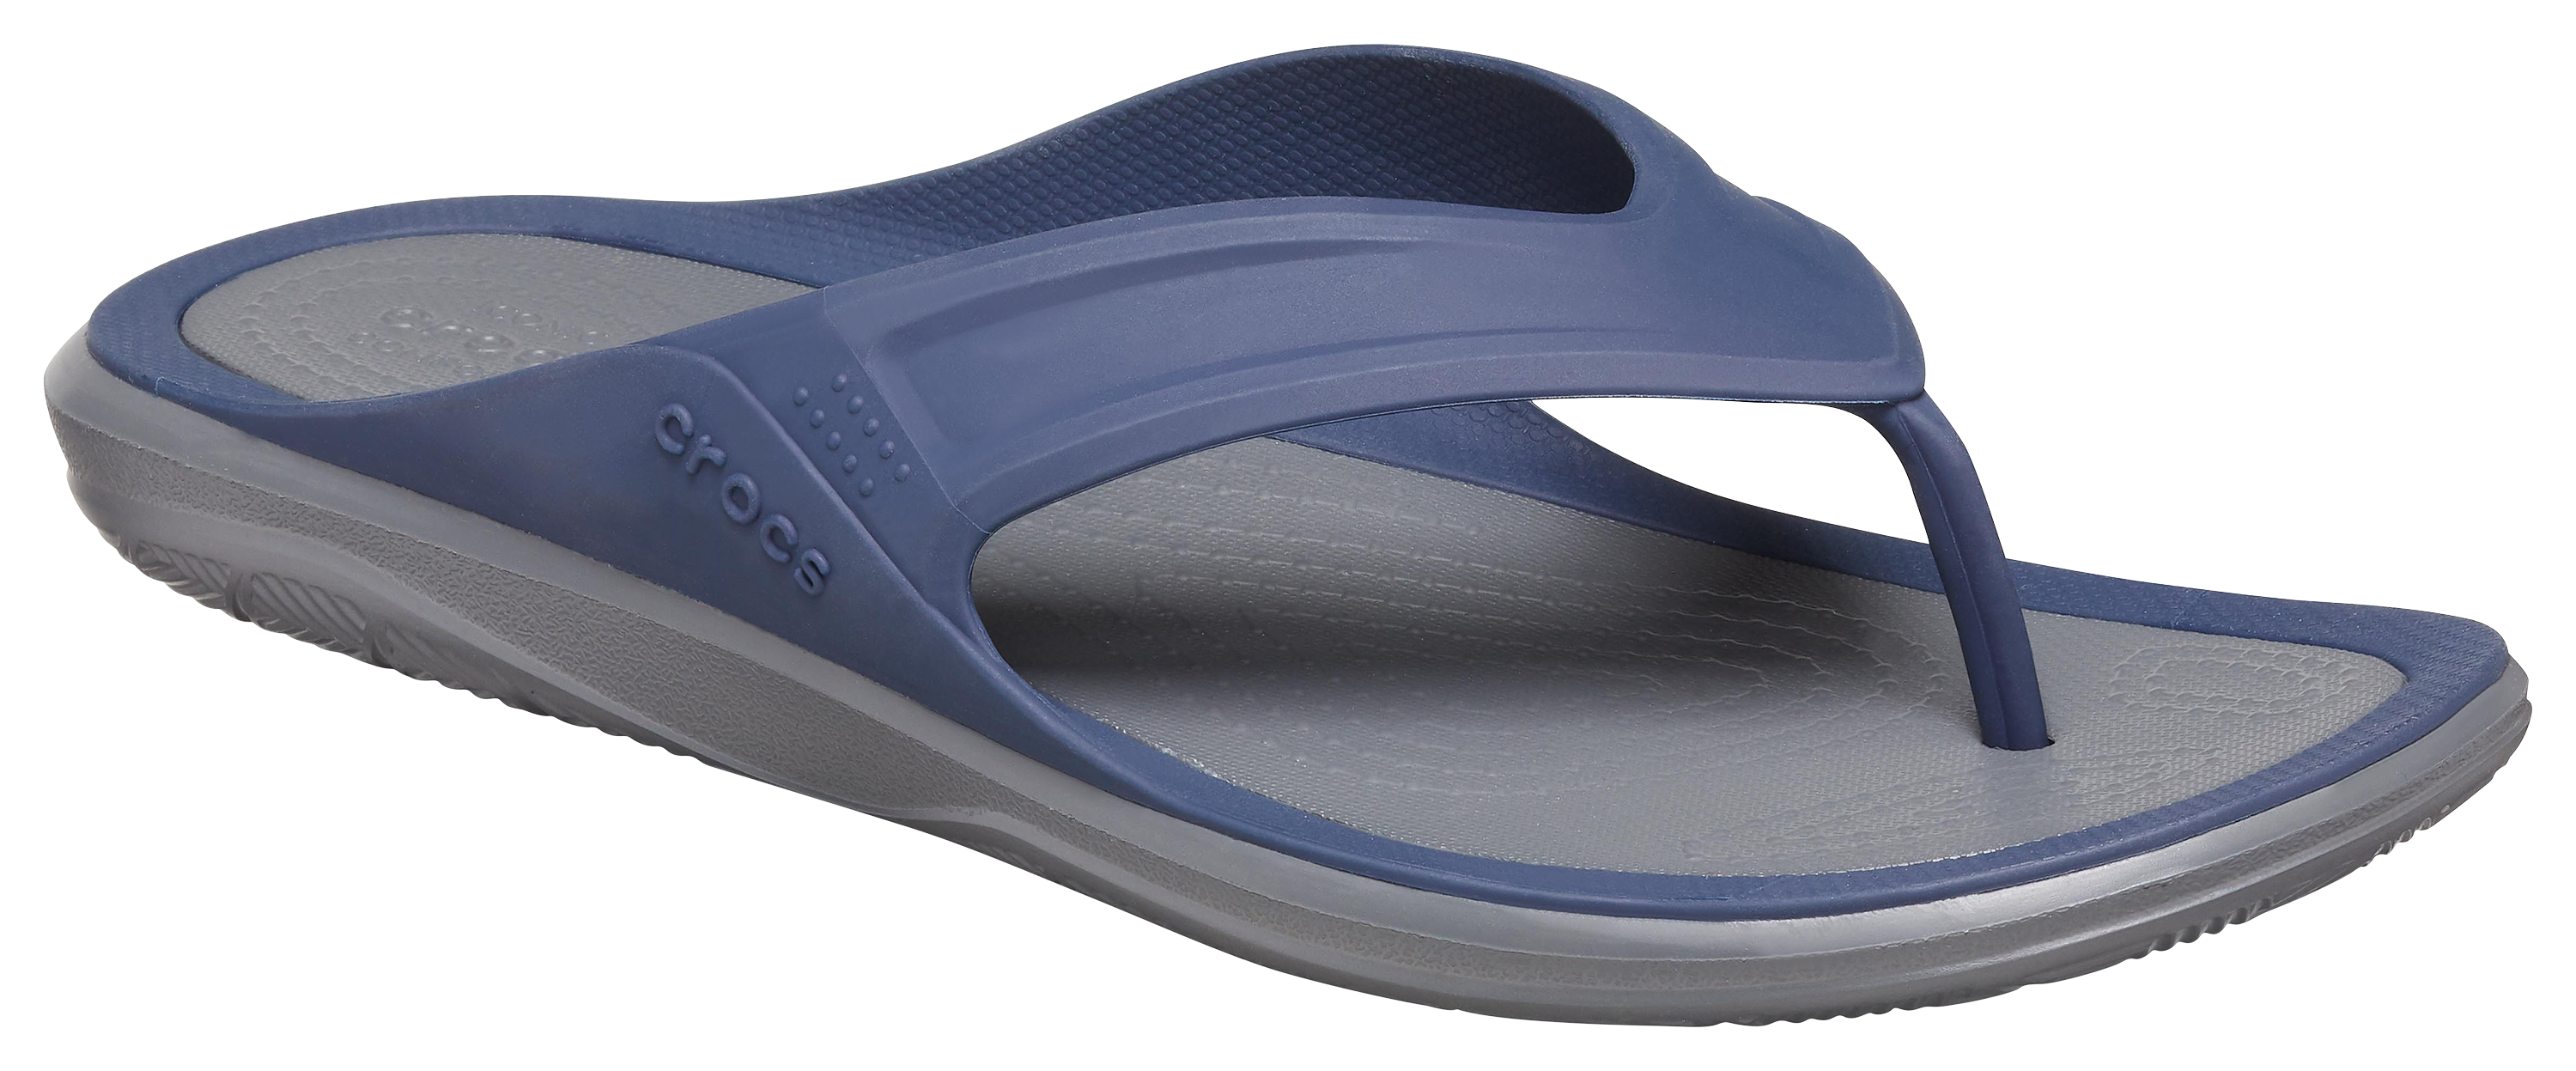 Crocs Swiftwater Wave Flip Thong Sandals for Men - Navy/Slate Grey - 11M